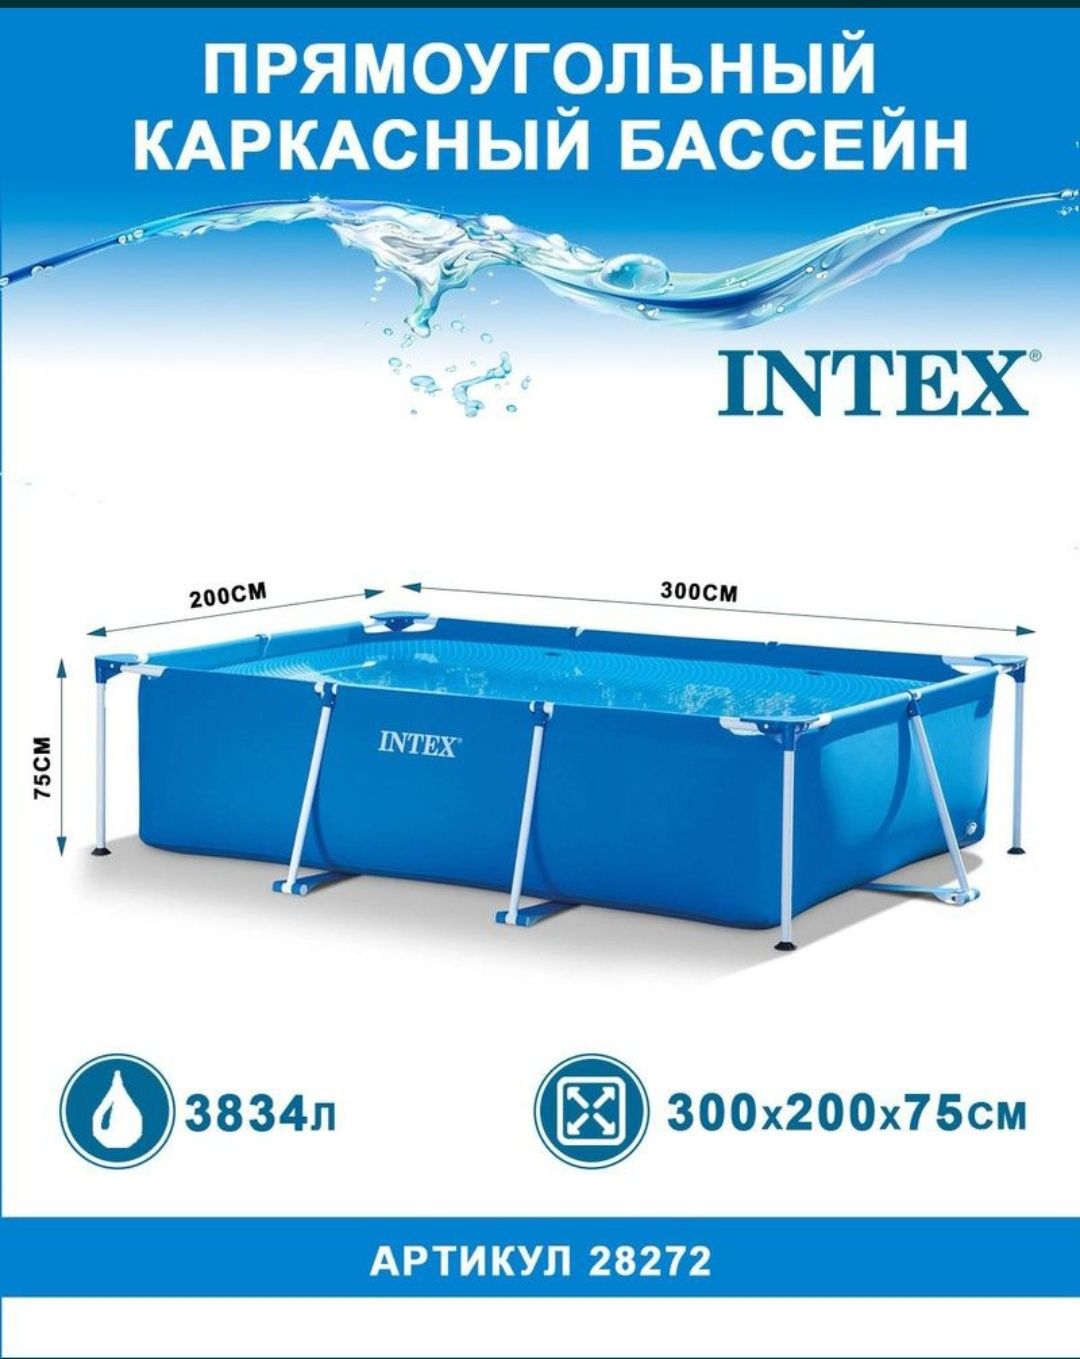 Intex basseyn 300x200x75 dostavka+ustanovka